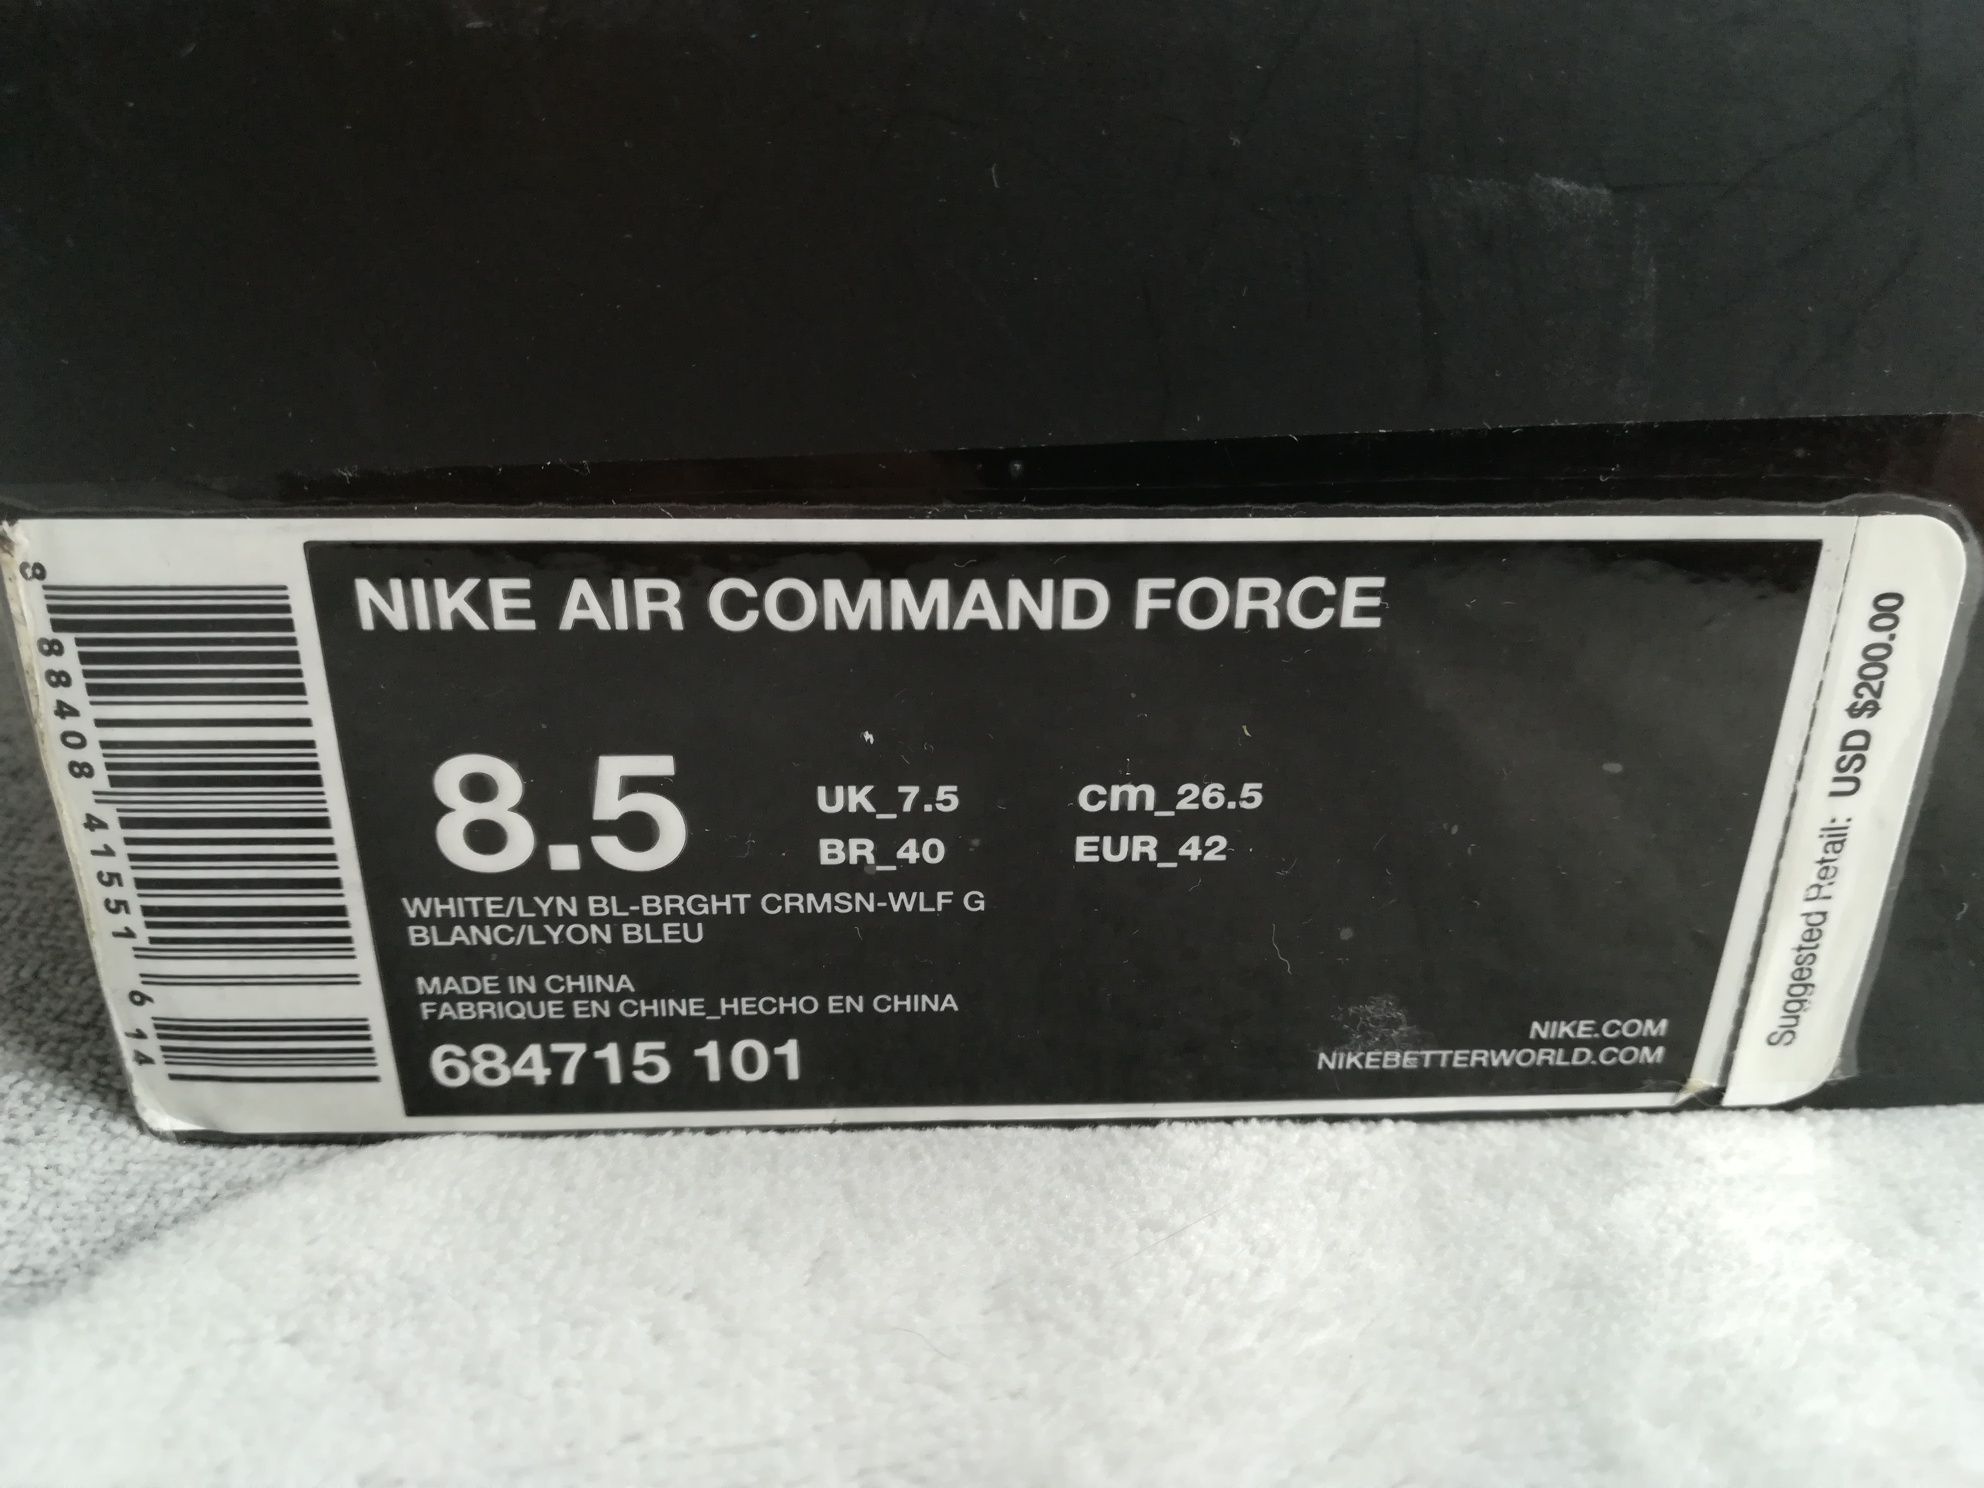 Nike command force flight Jordan uptempo zoom